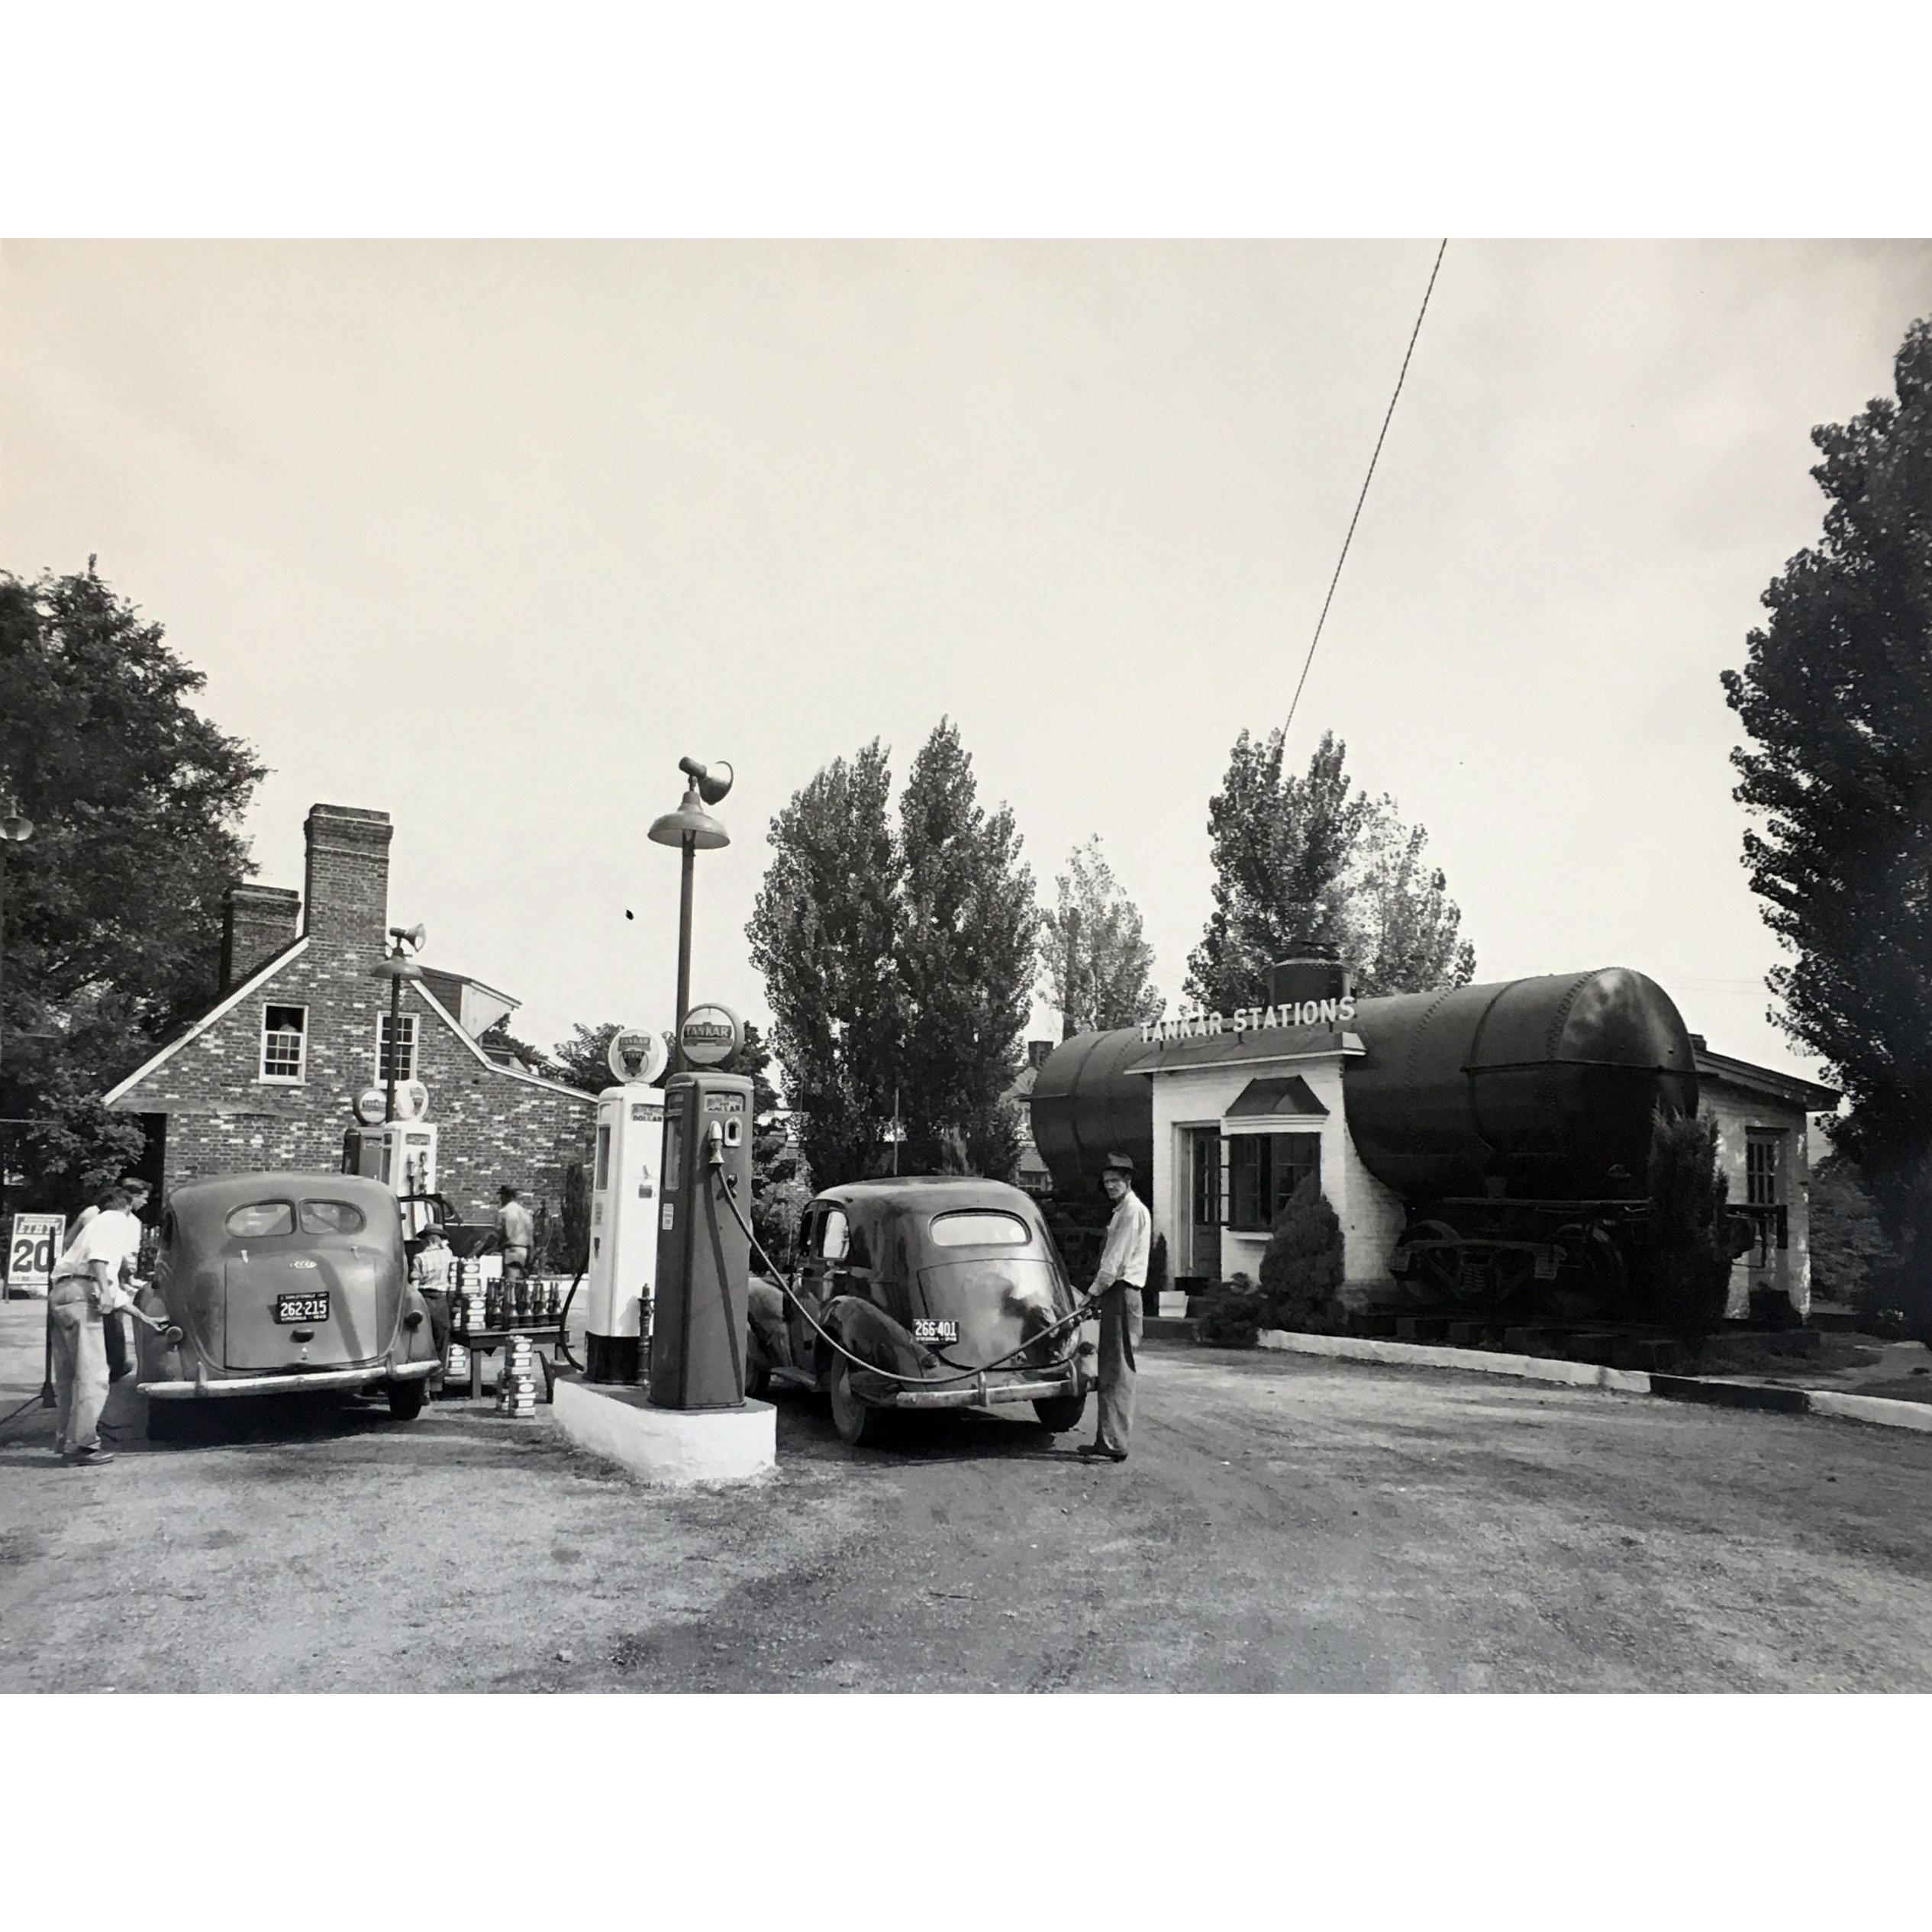 Vintage 1950s Gas Station Photograph